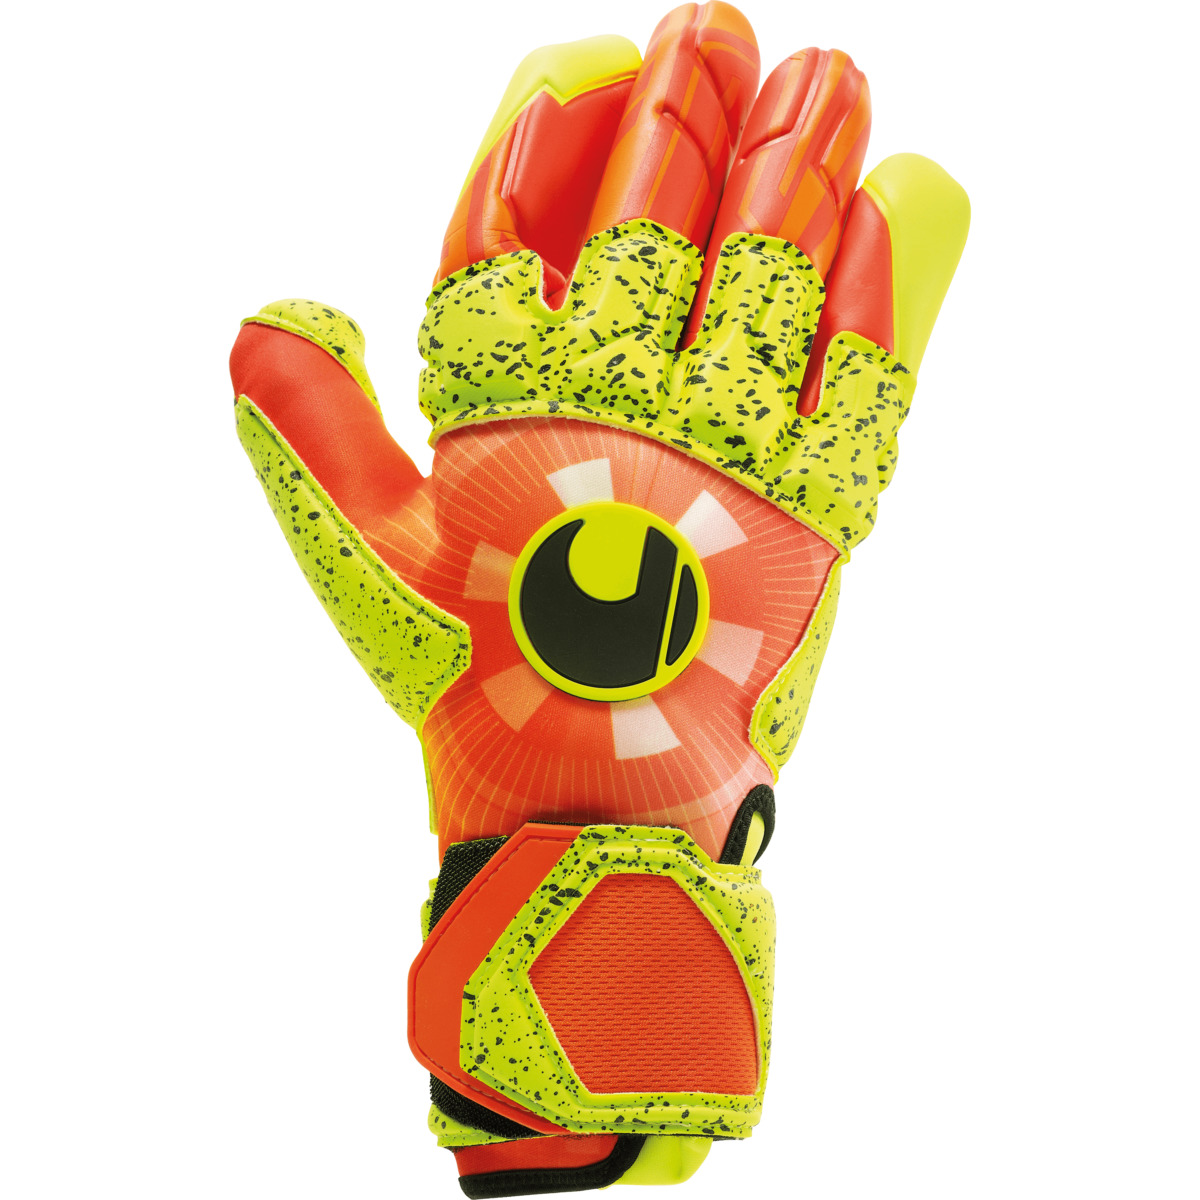 Uhlsport Goalkeeper Gloves